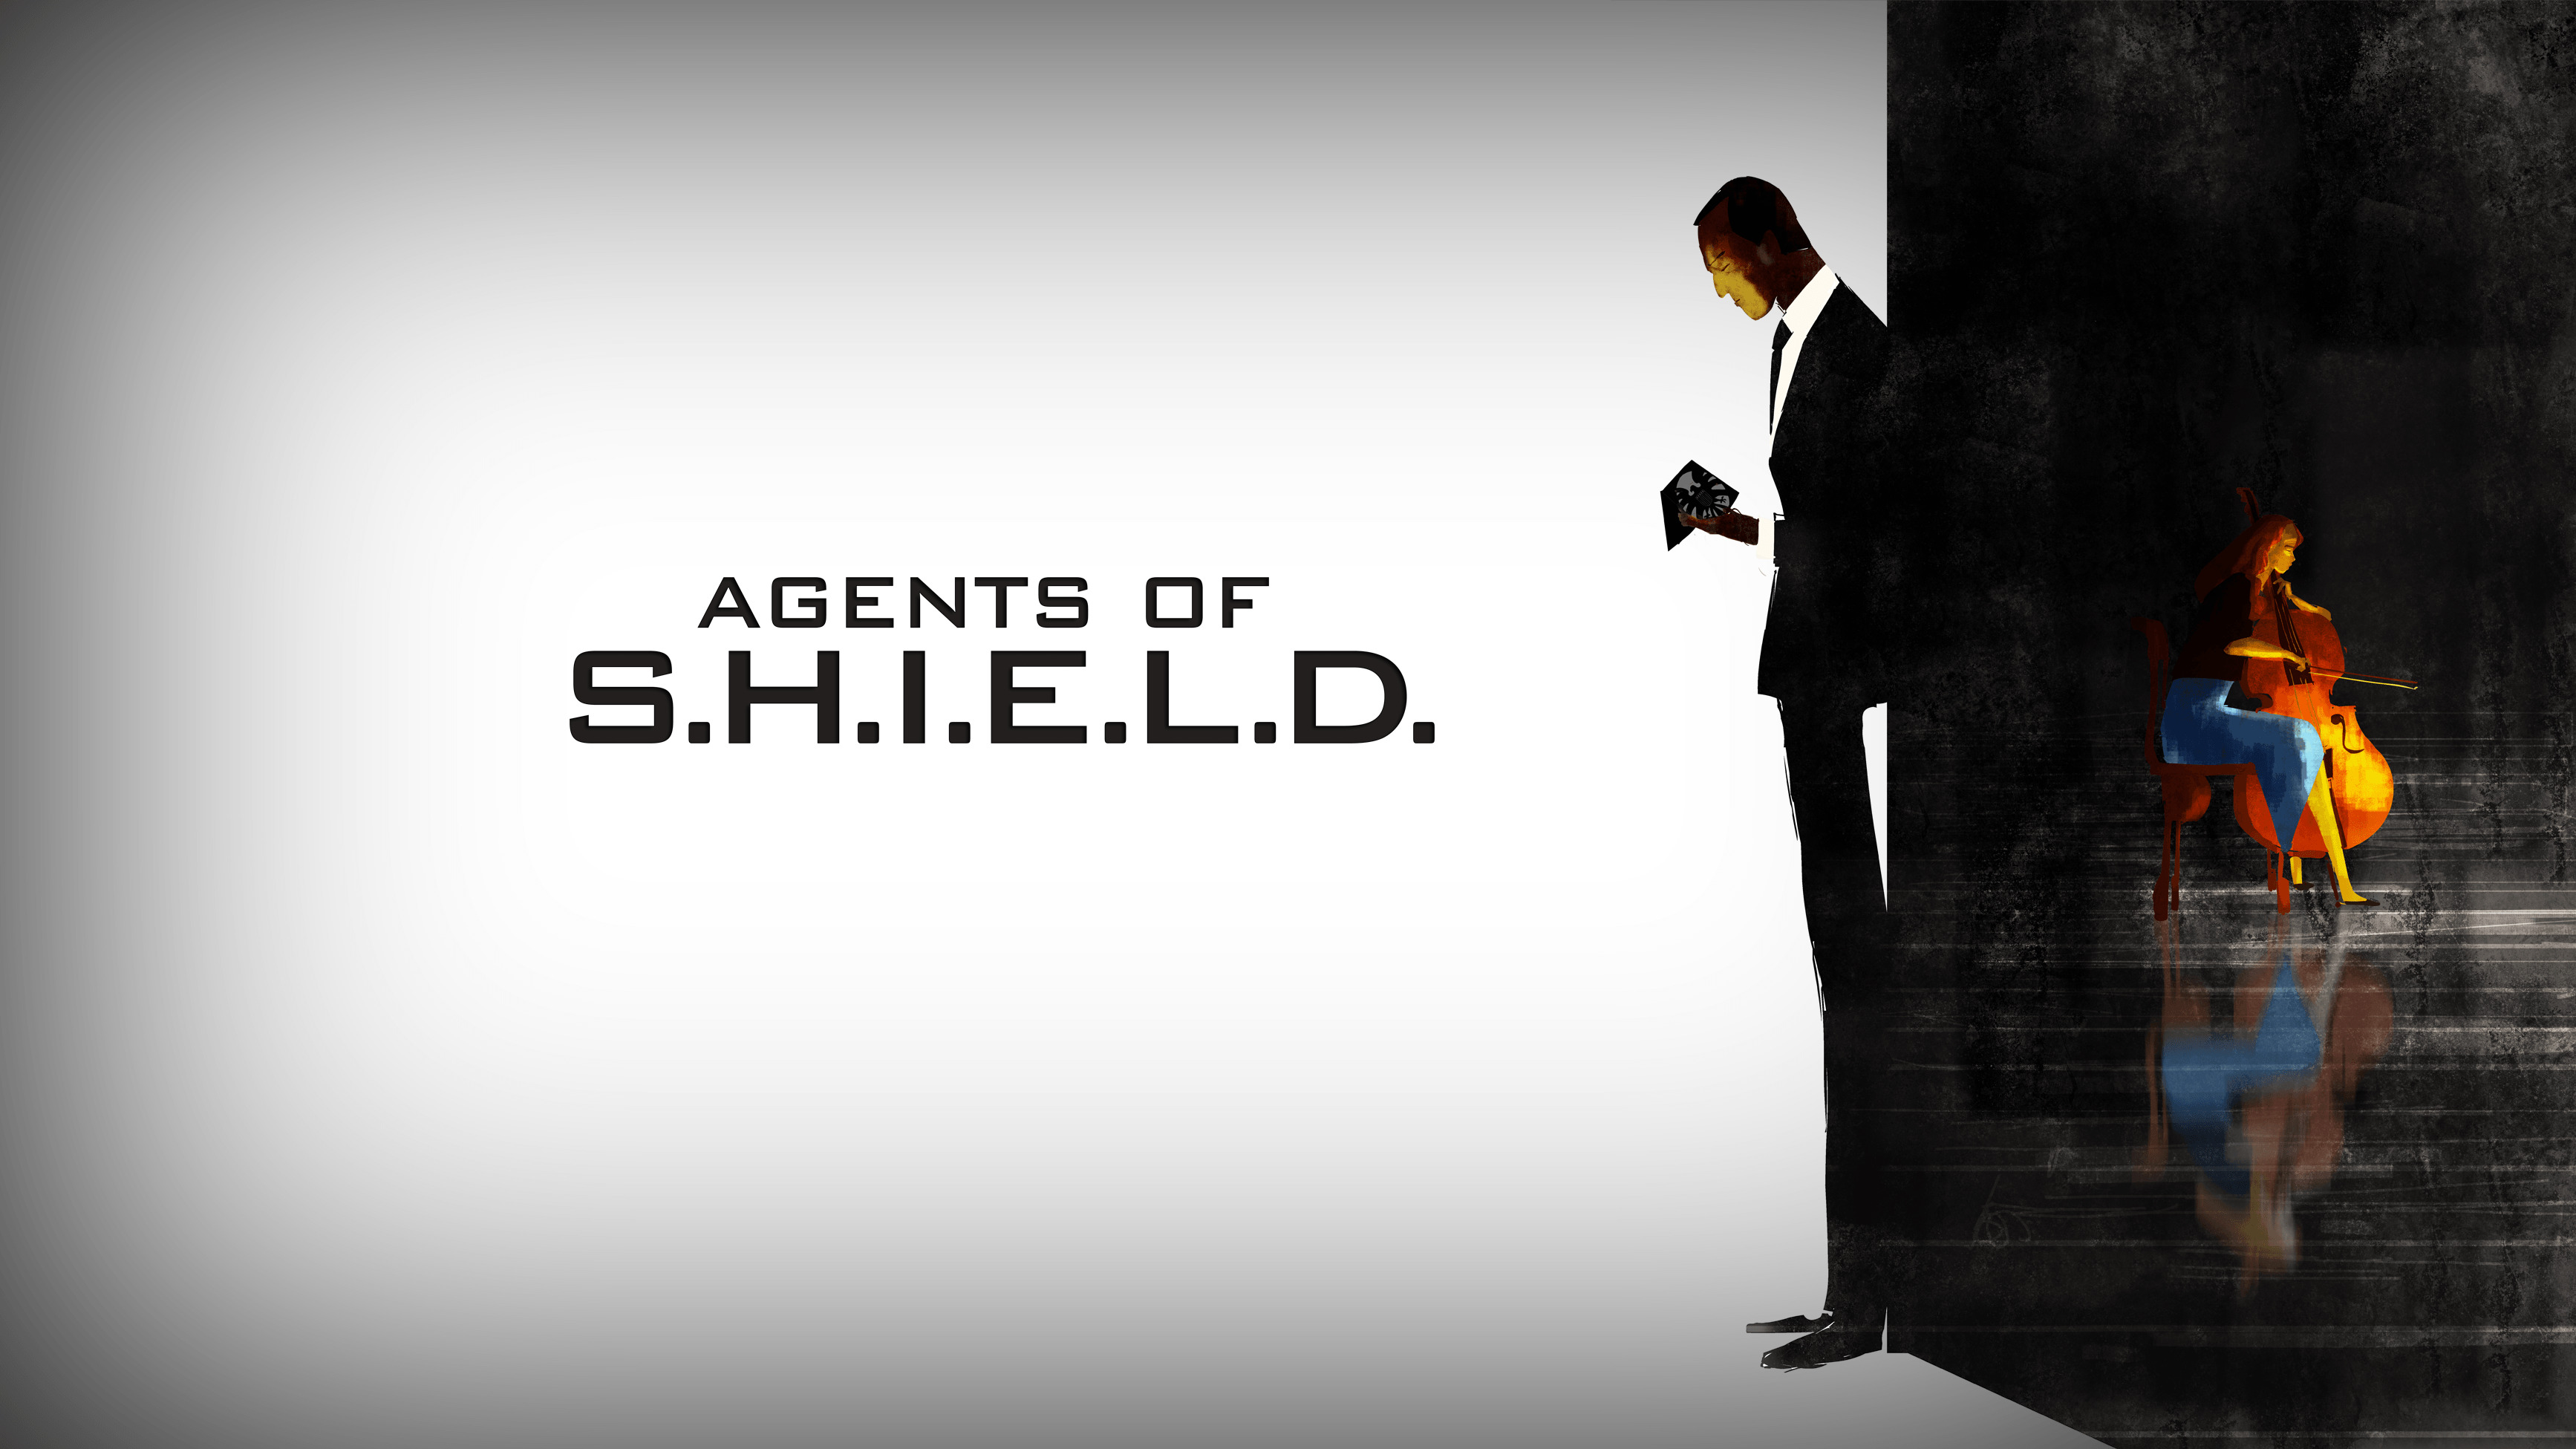 Phil Coulson, Agents Of S.H.I.E.L.D. Wallpaper